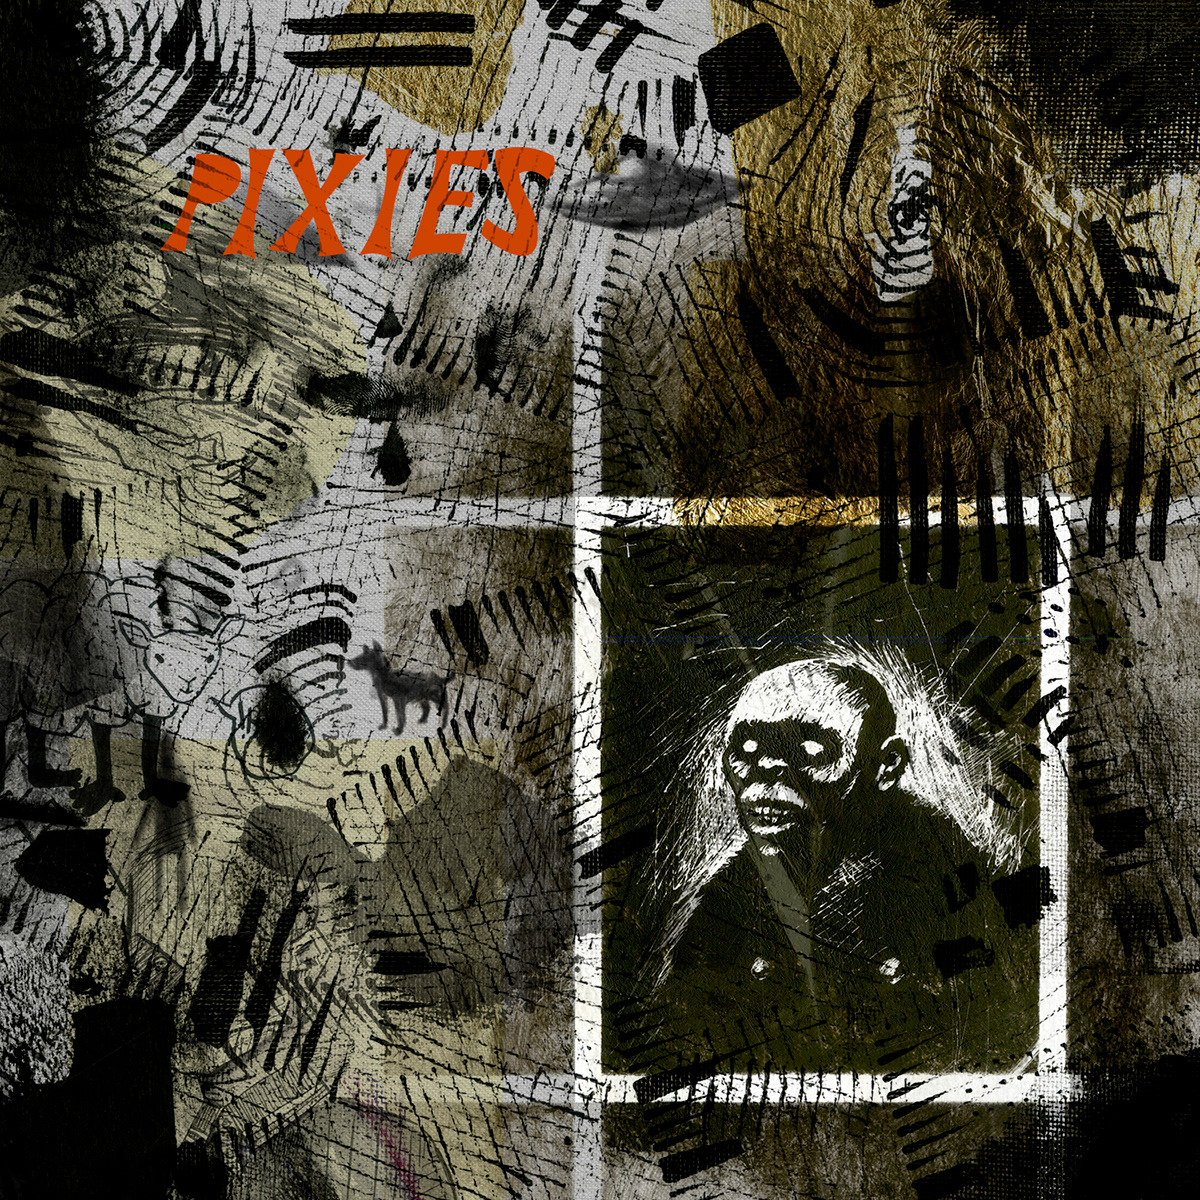 pixies Album cover art jason scalfano monkey dark conceptual expressive